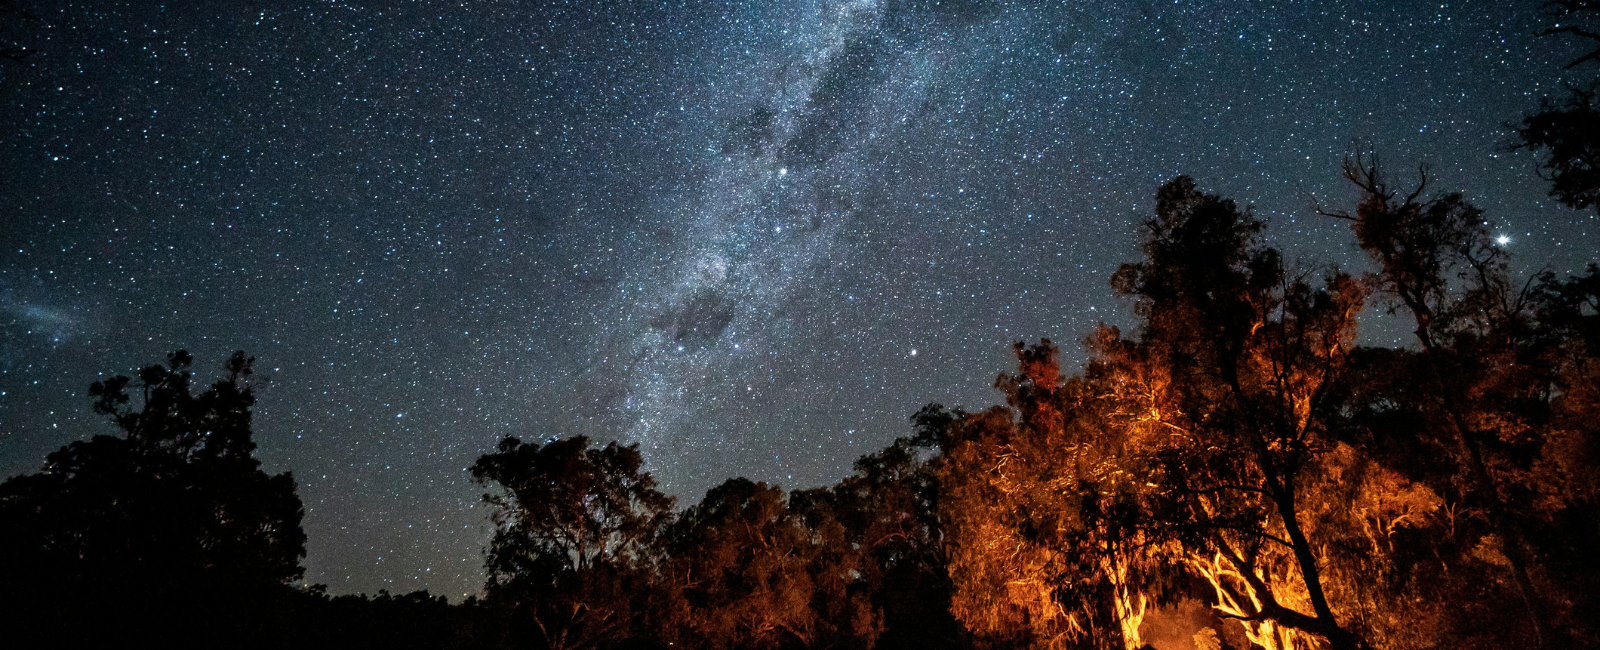 Blue Mountains, Australia camp fire under night sky